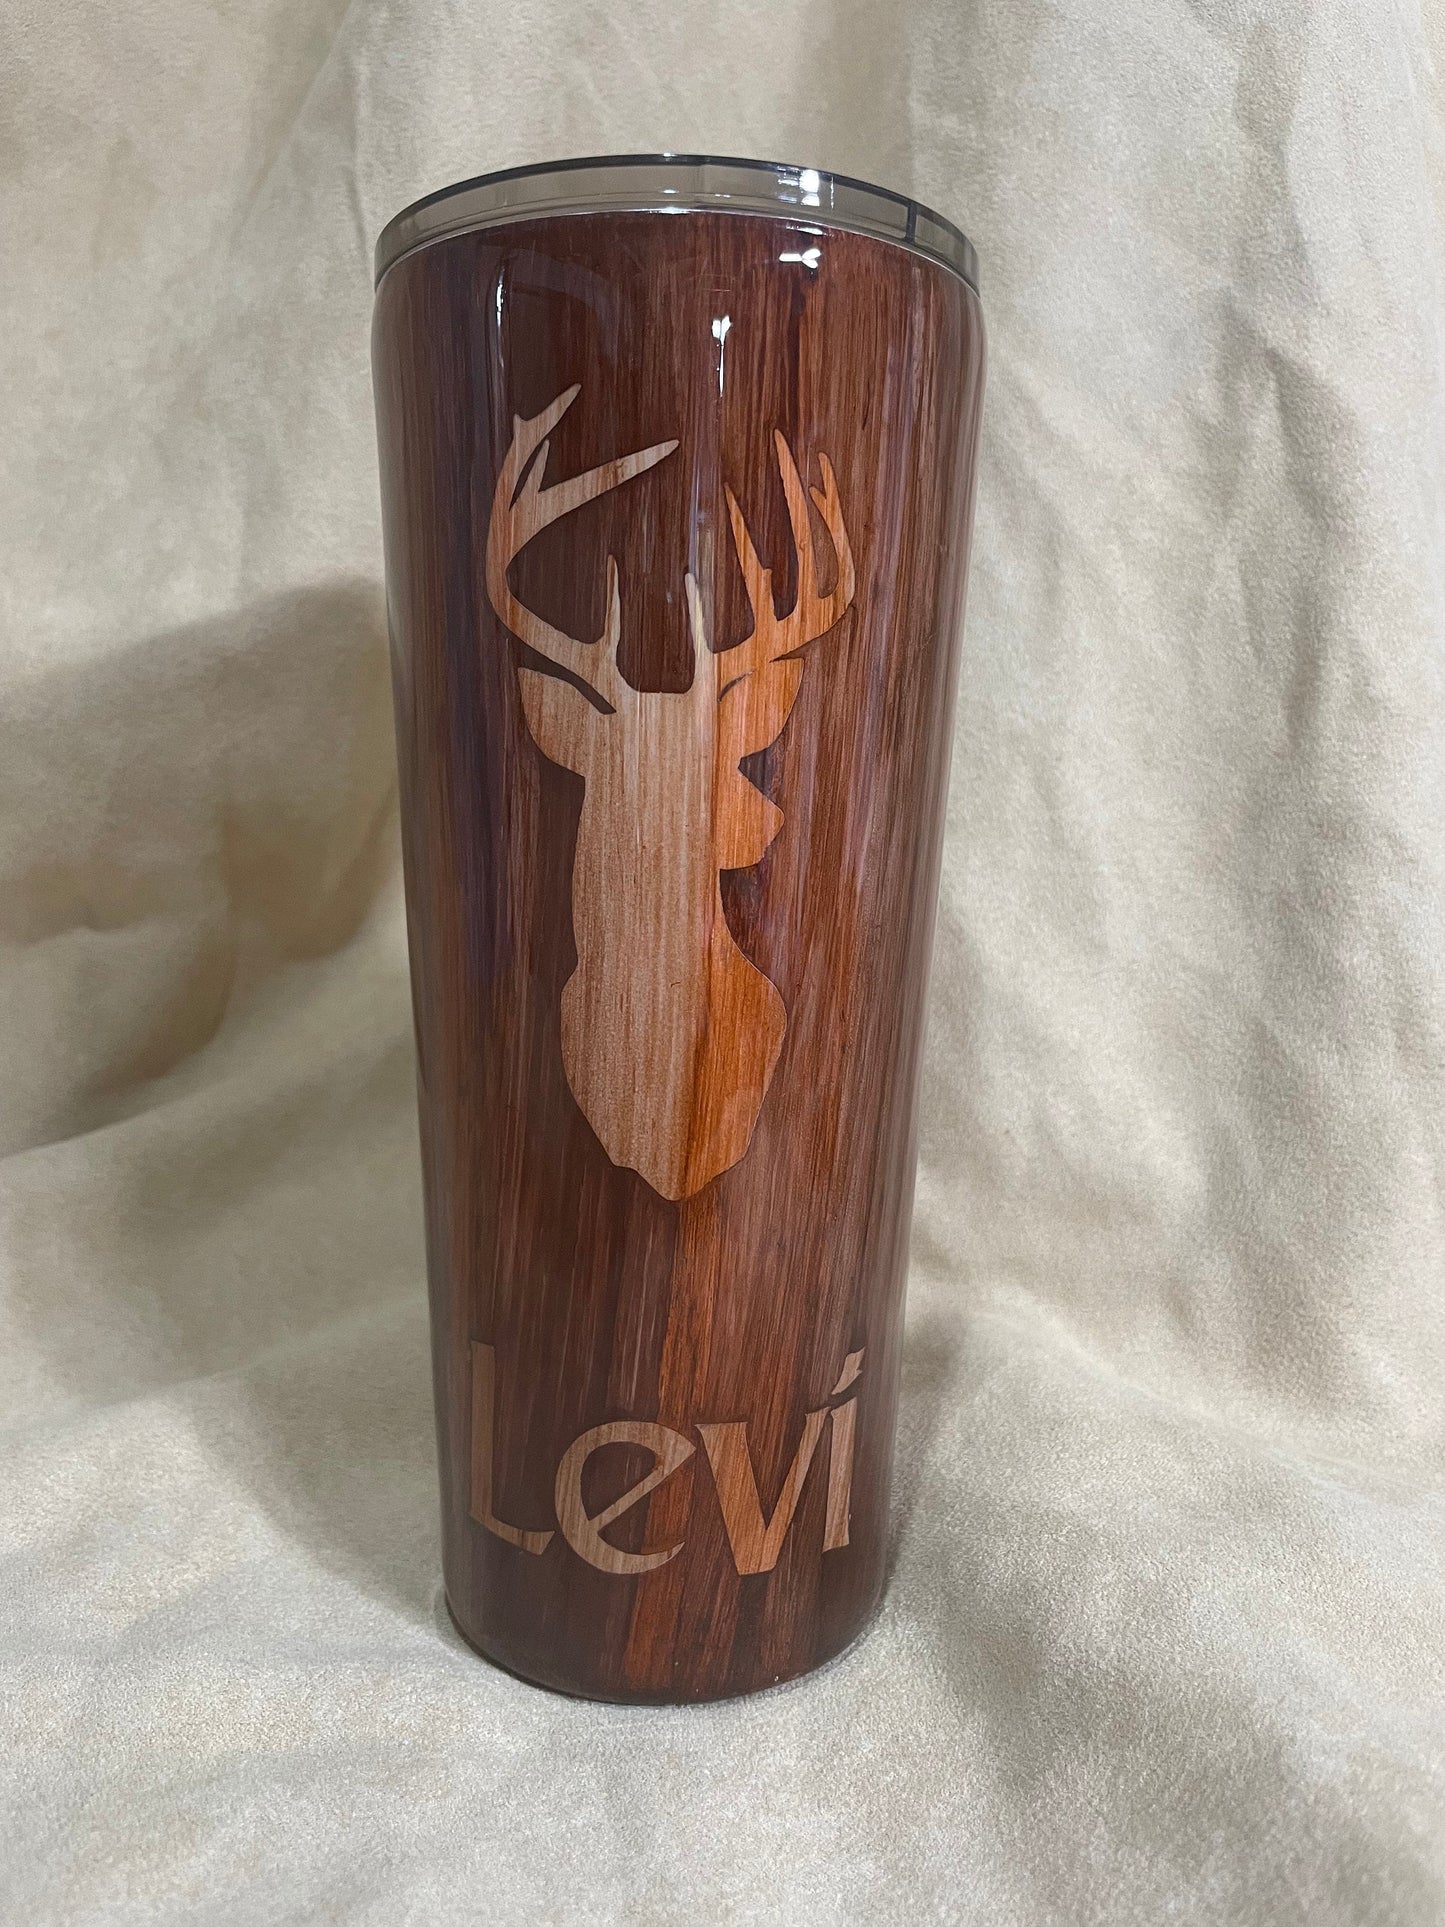 Deer Tumbler (Hunters Tumbler), hand painted wood grain look, gift for him or her